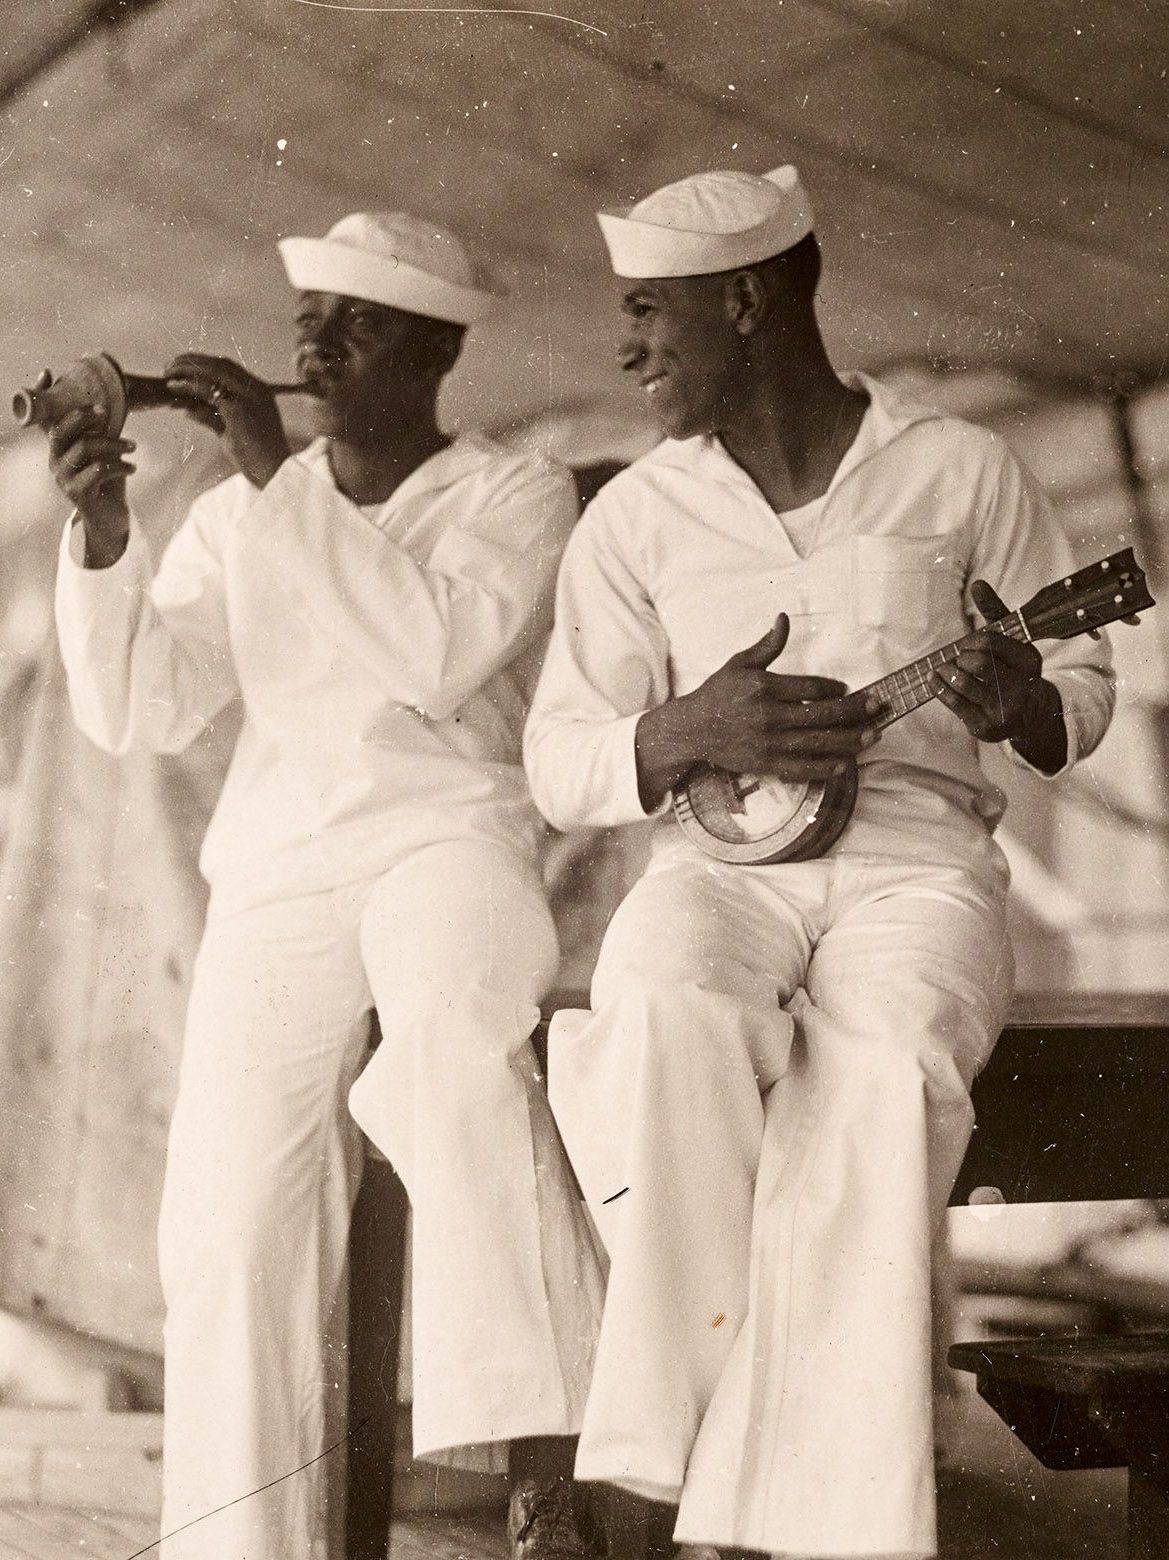 Black sailors in dress whites uniform playing music.